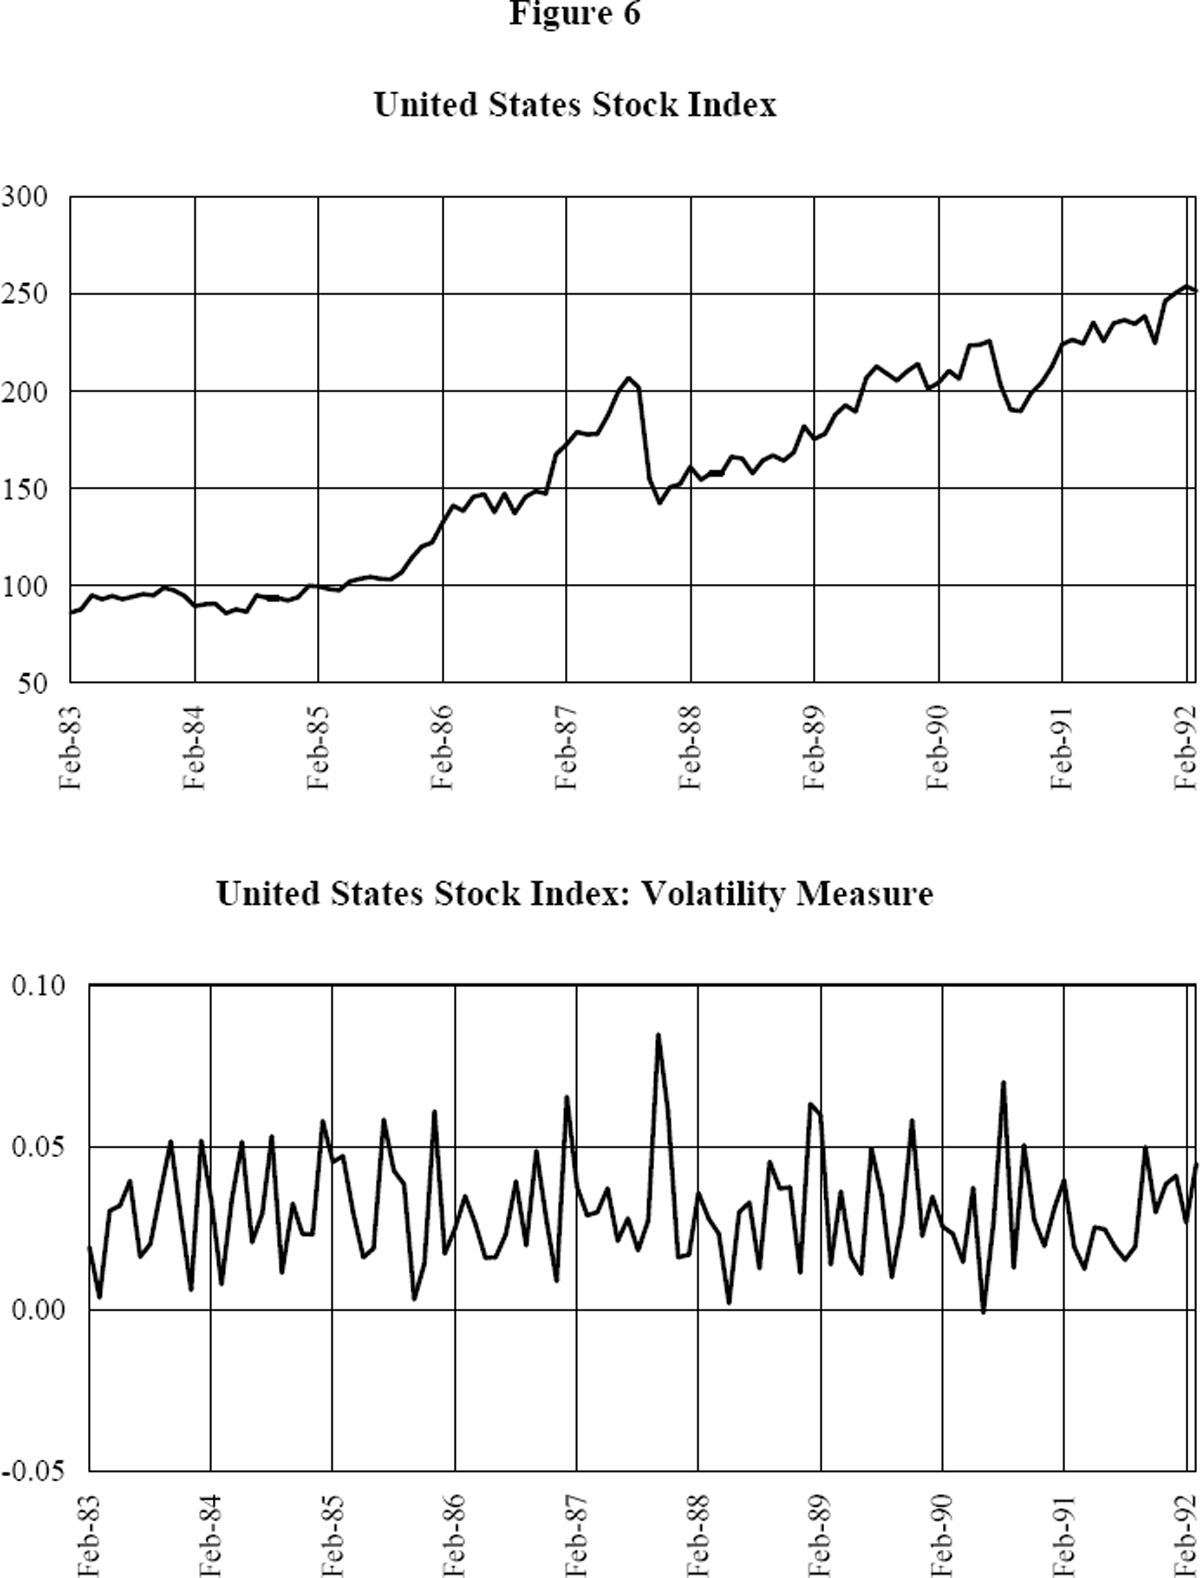 Figure 6: United States Stock Index and Volatility Measure